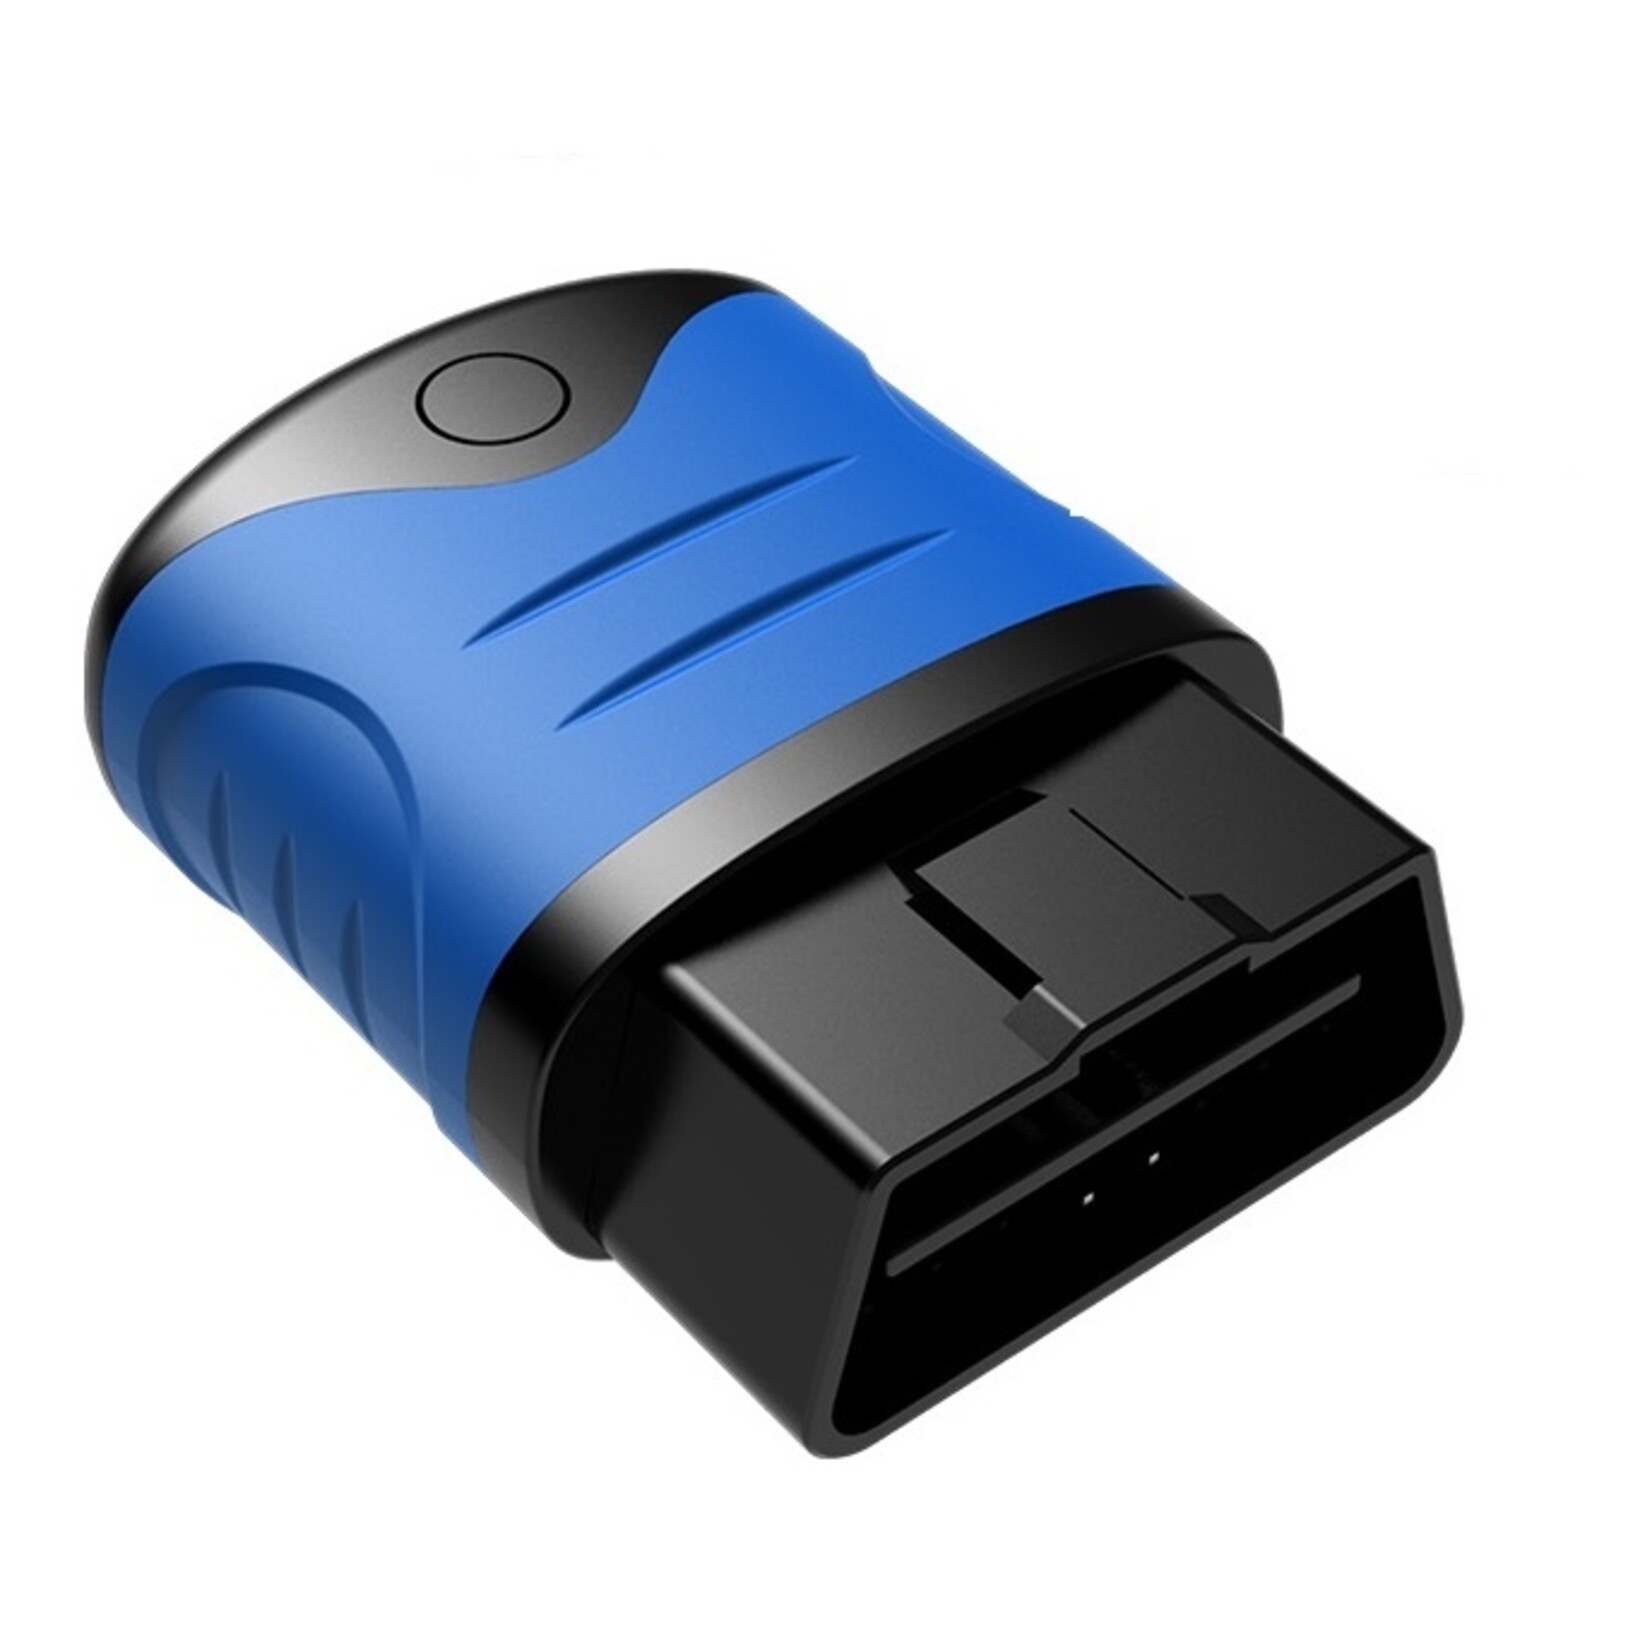 Autophix AUTOPHIX 3310 Bluetooth OBD2-scanner voor VW/Audi/Skoda/SEAT